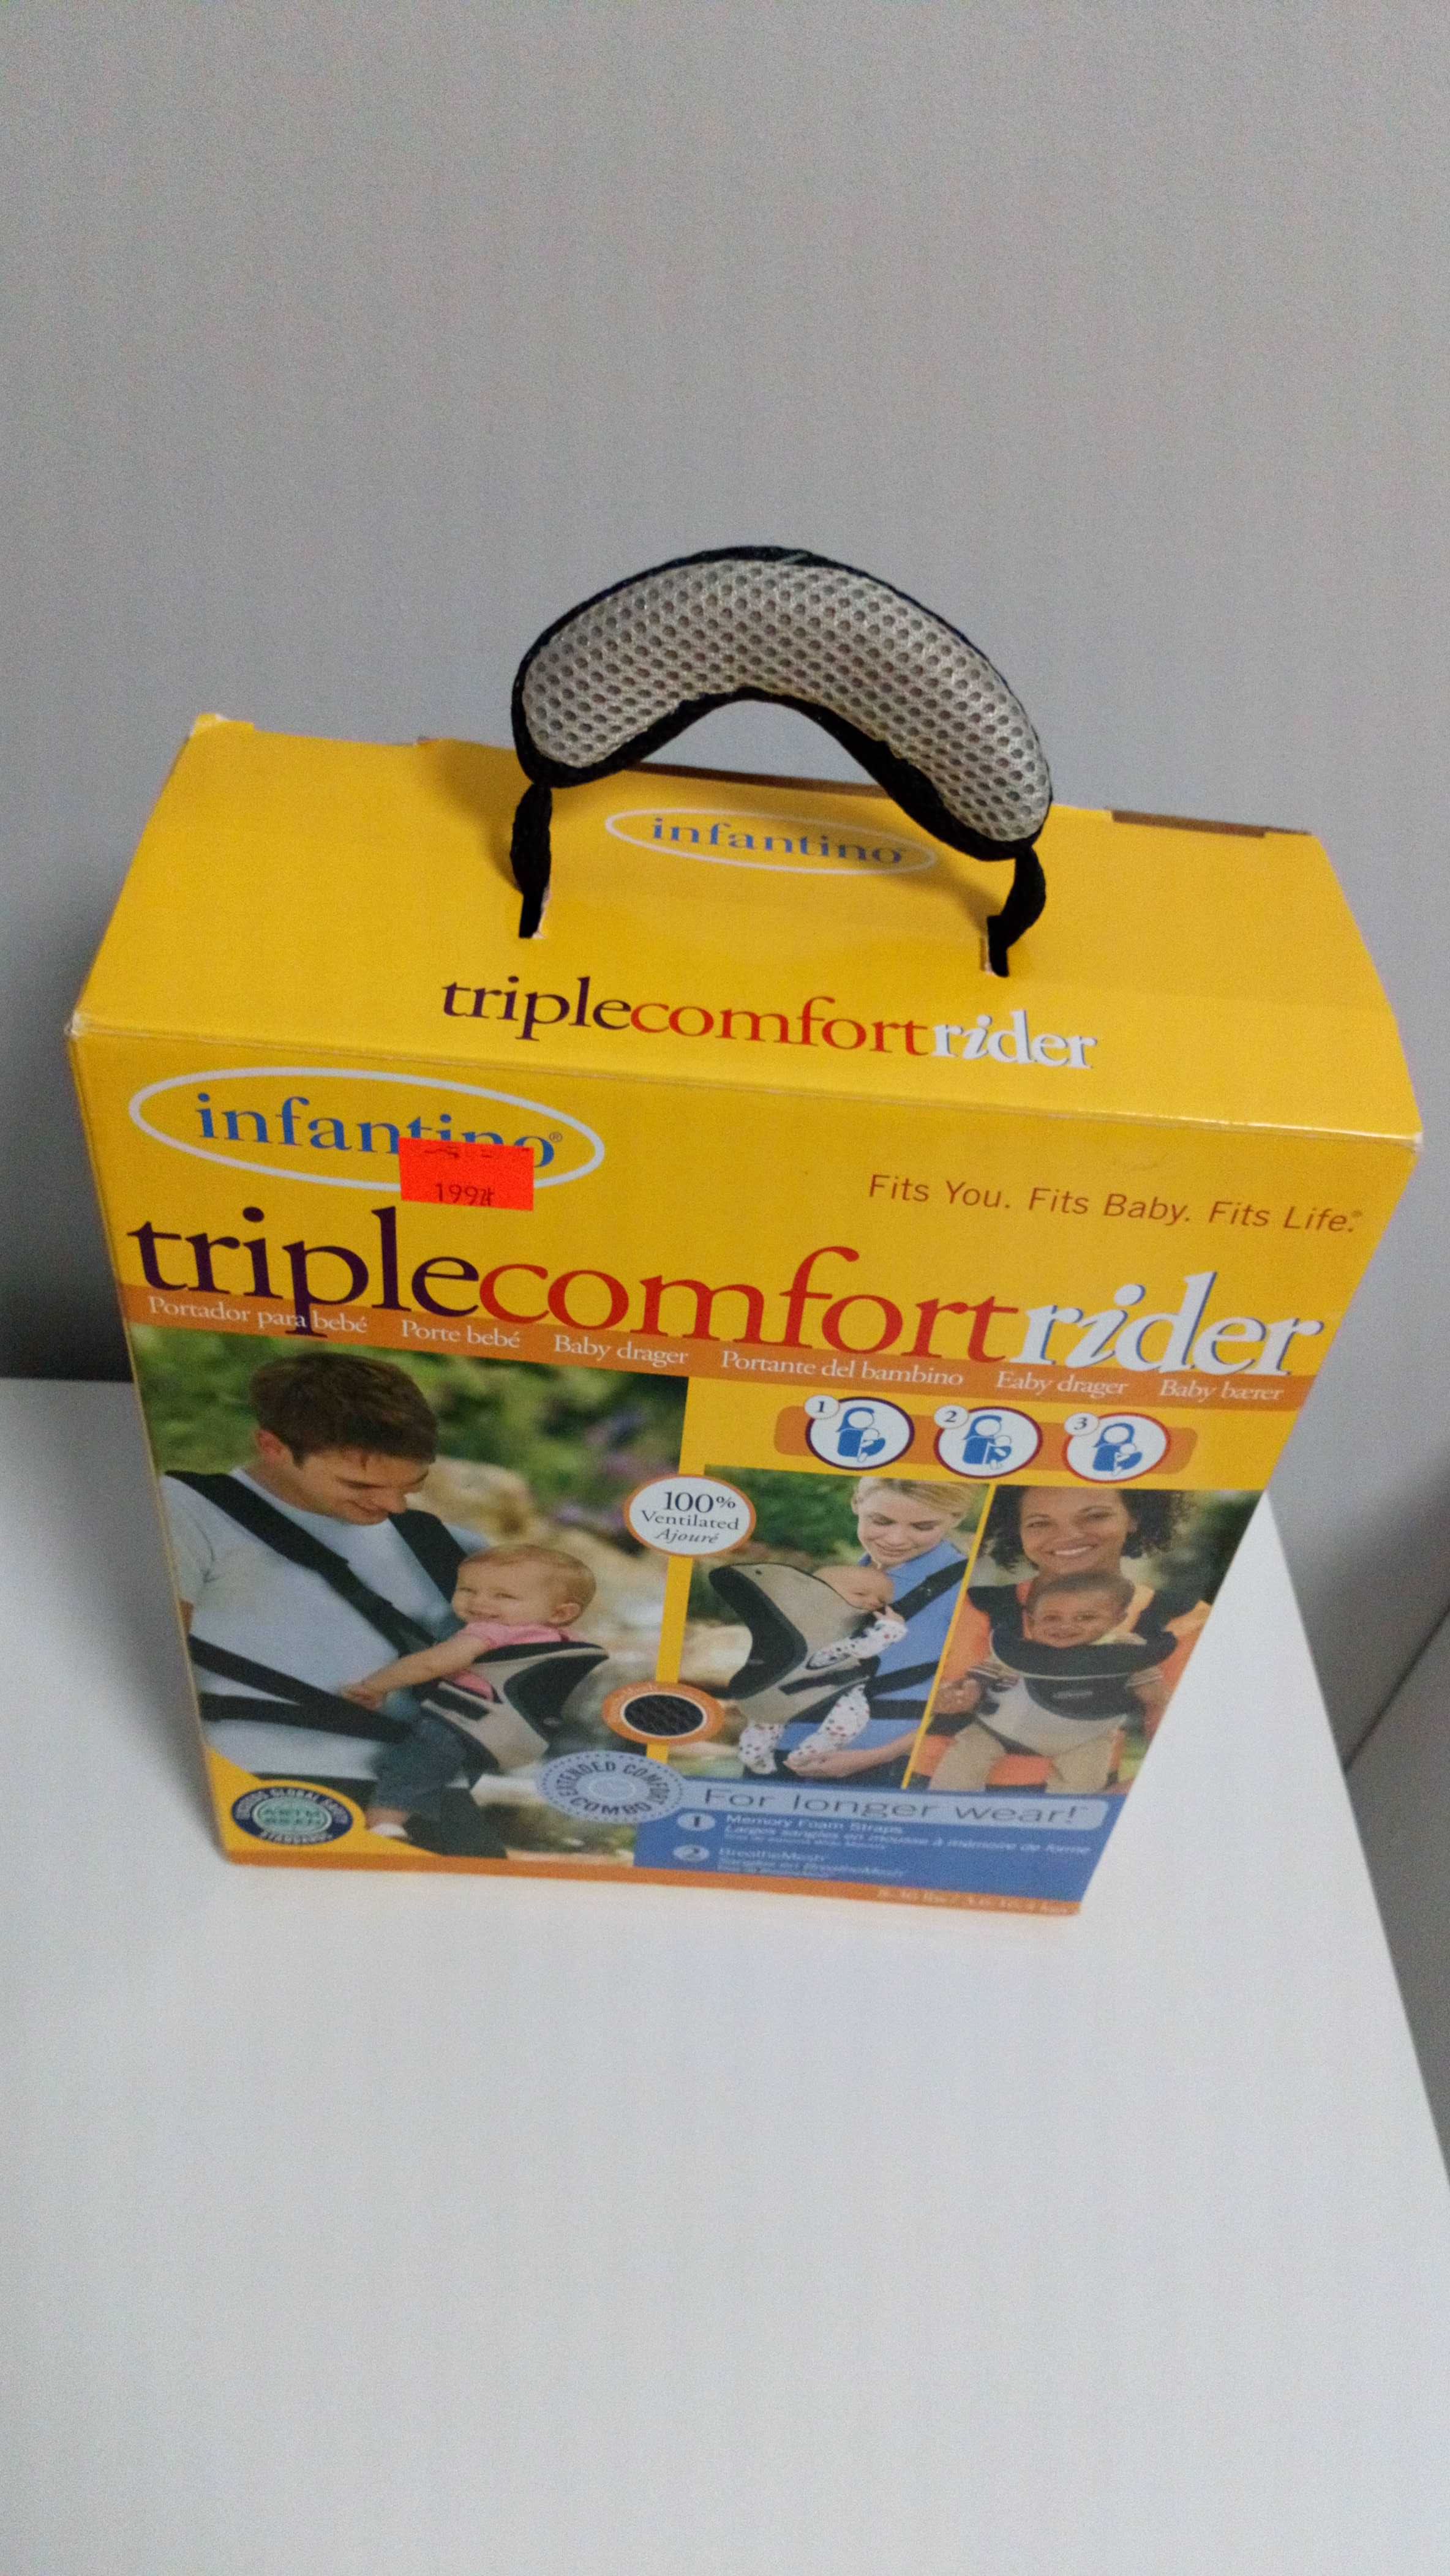 Nosidełko triplecomfort rider firmy infantino 3,6-16,4 kgs